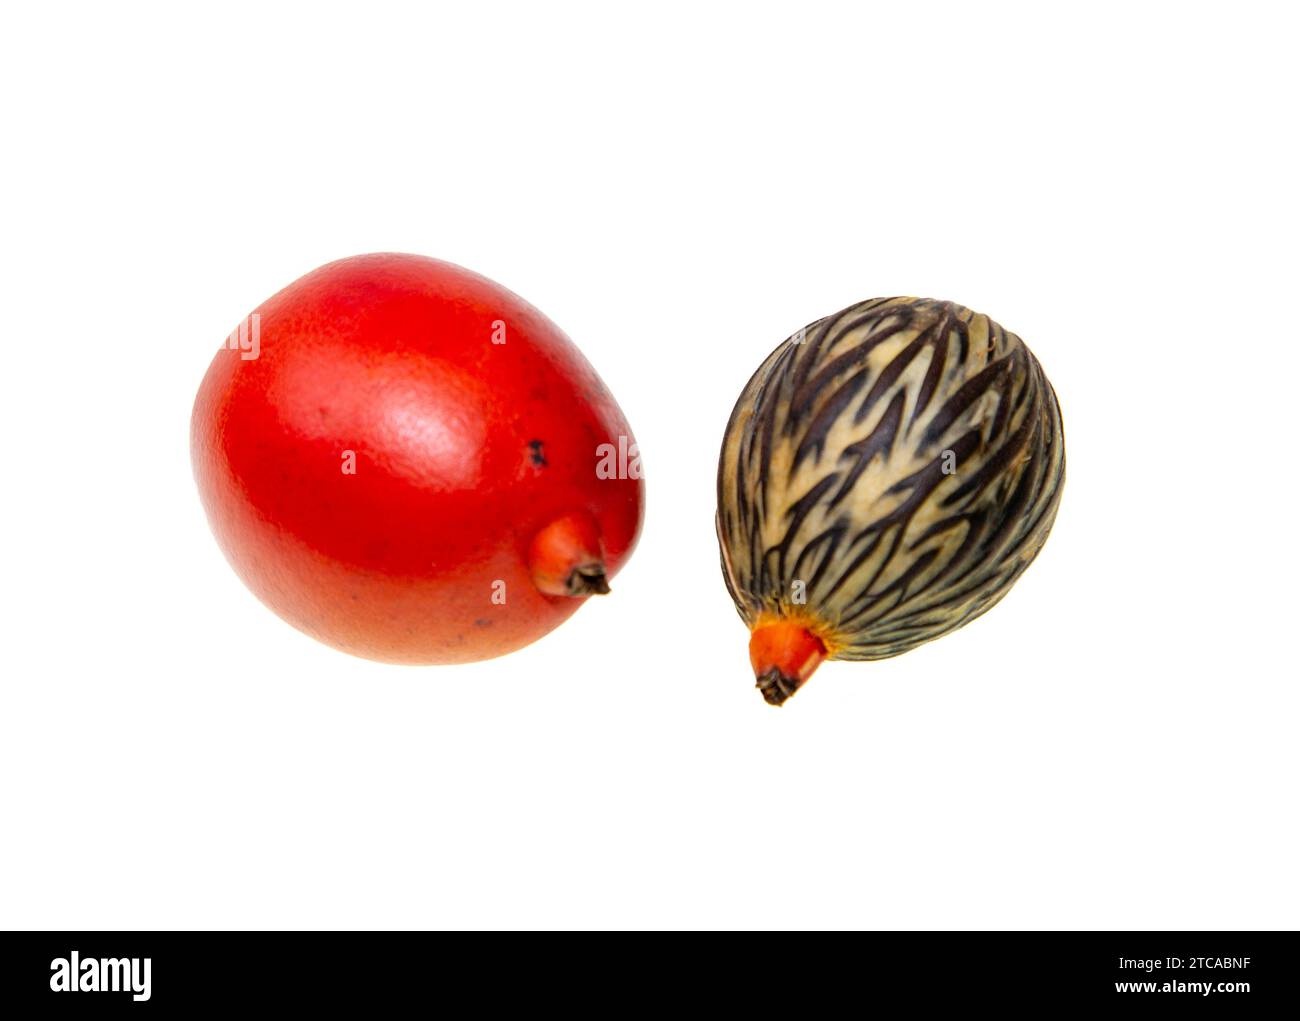 Gran fruto rojo y semilla de la palmera cola de zorro, Wodyetia bifurcata, endémica de la selva tropical de Queensland, Australia Foto de stock